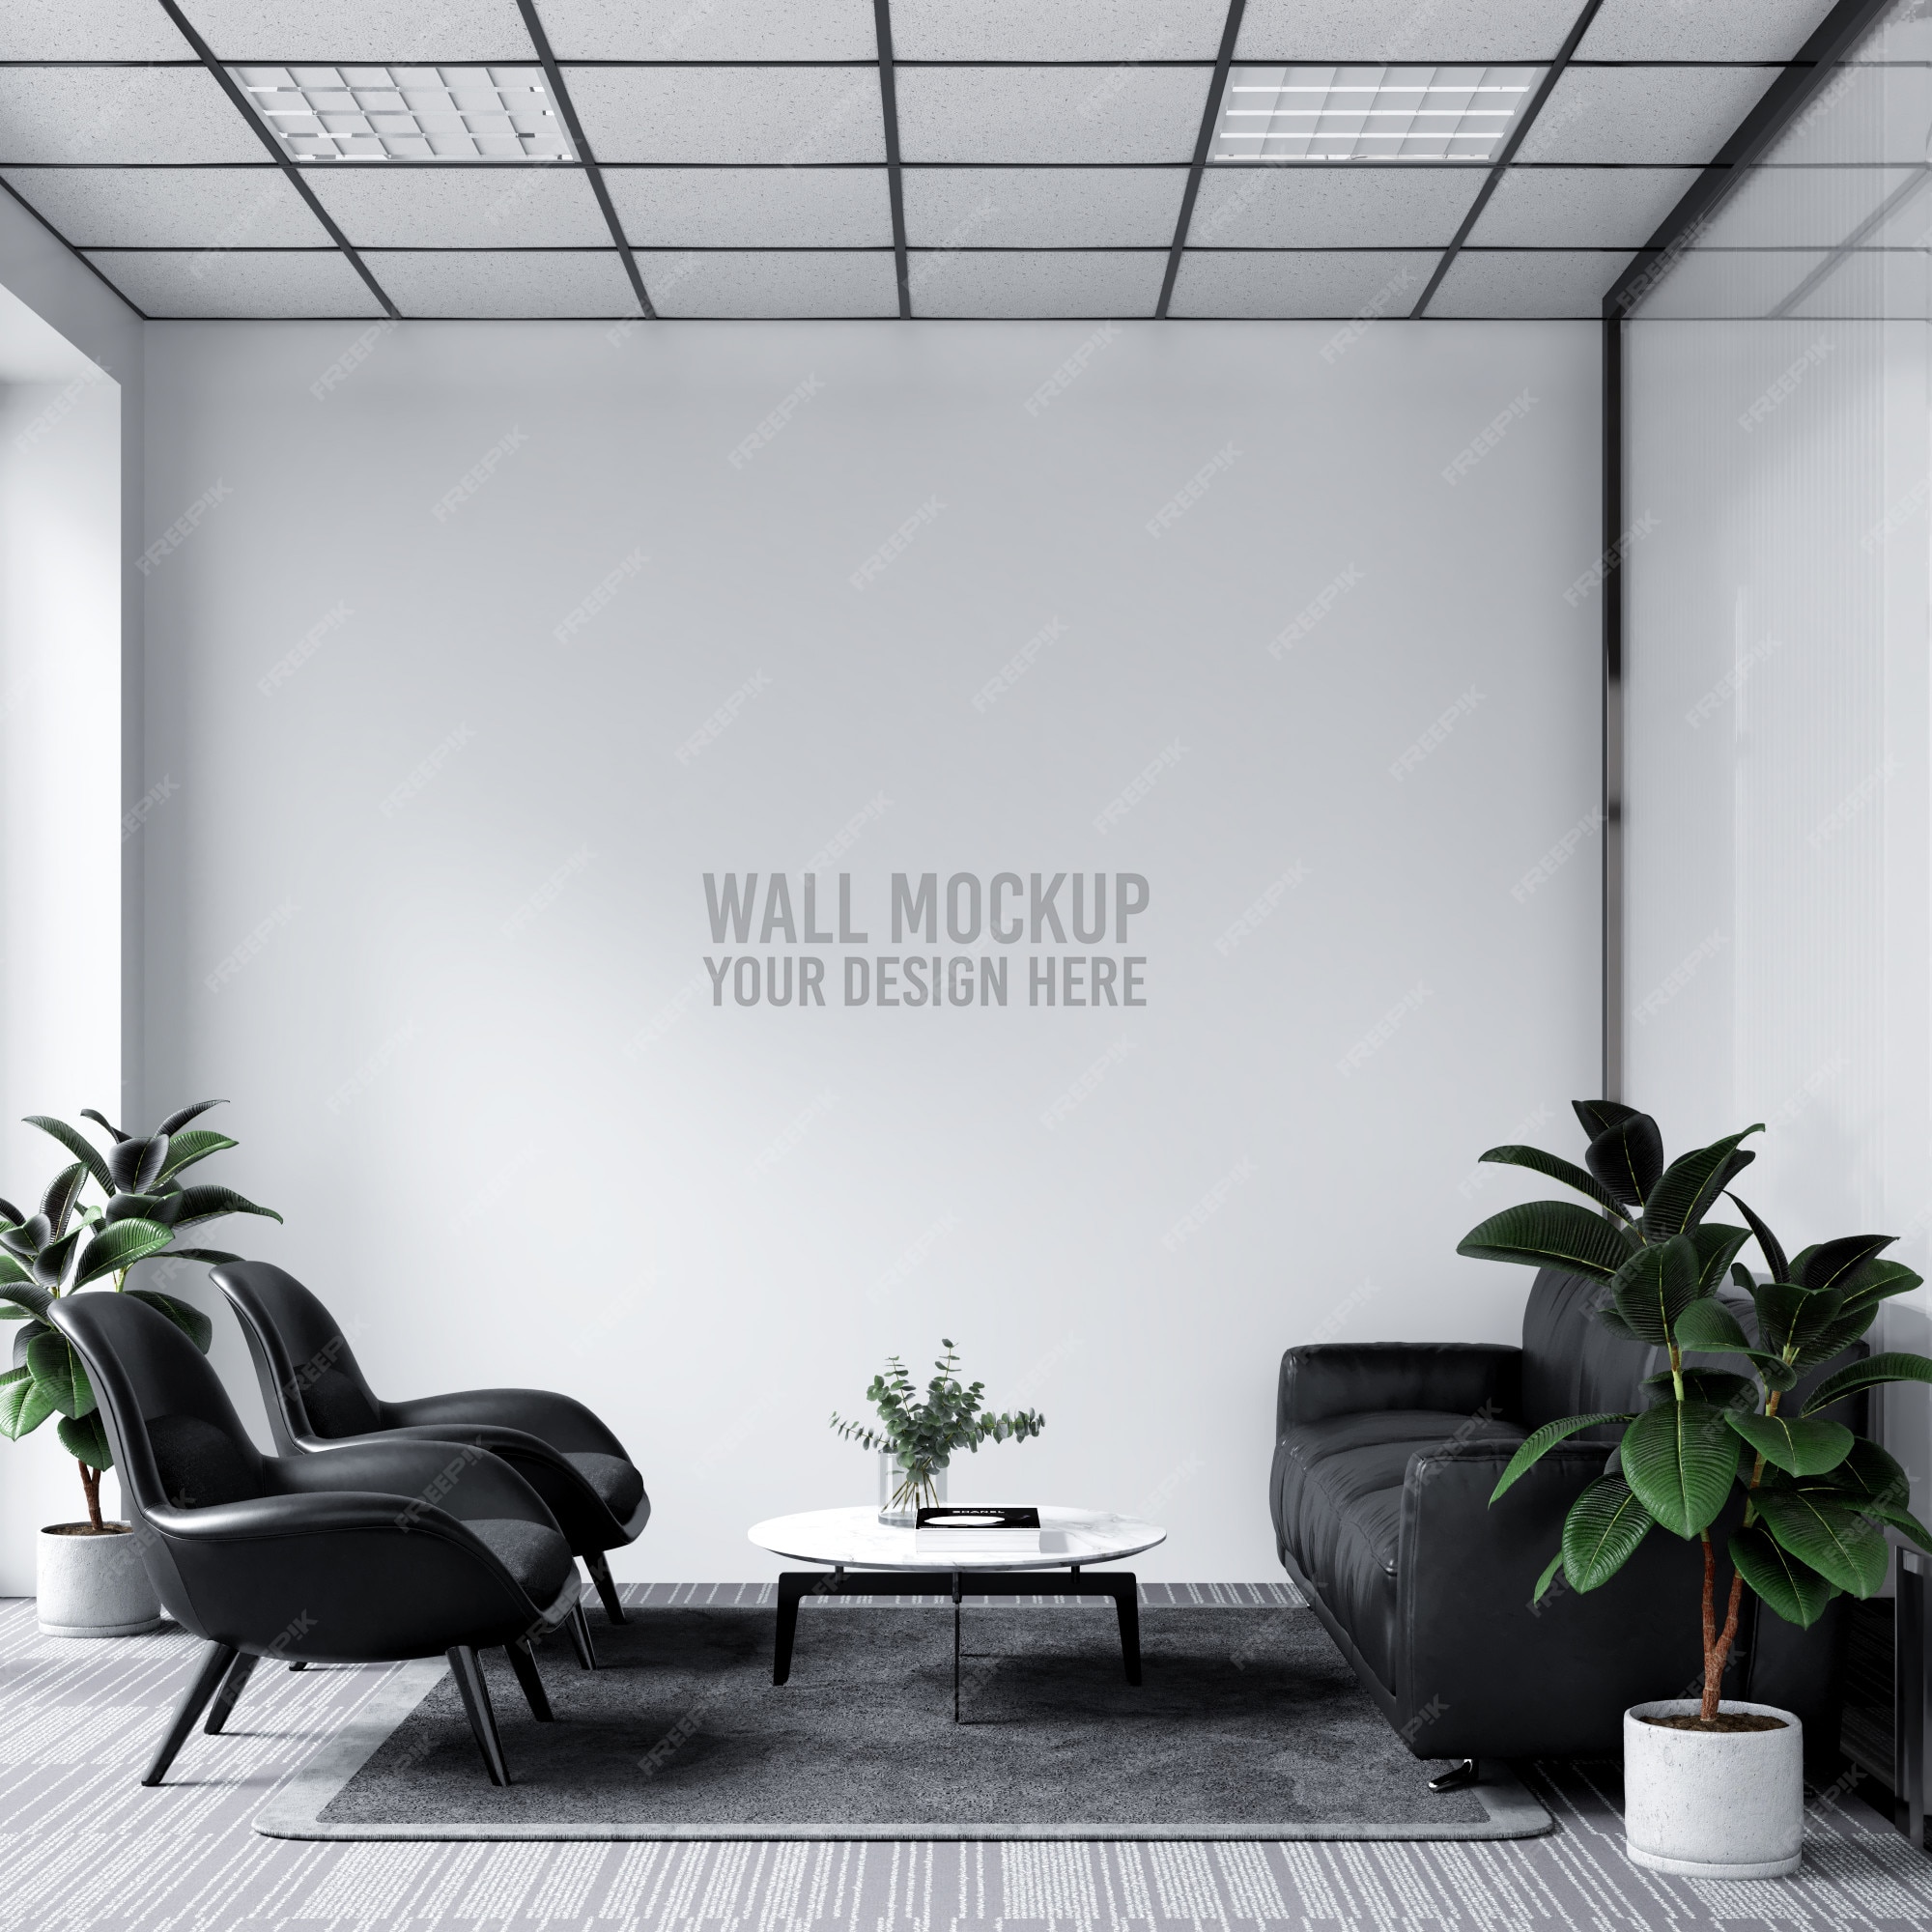 Premium PSD | Modern office lobby waiting room wall mockup